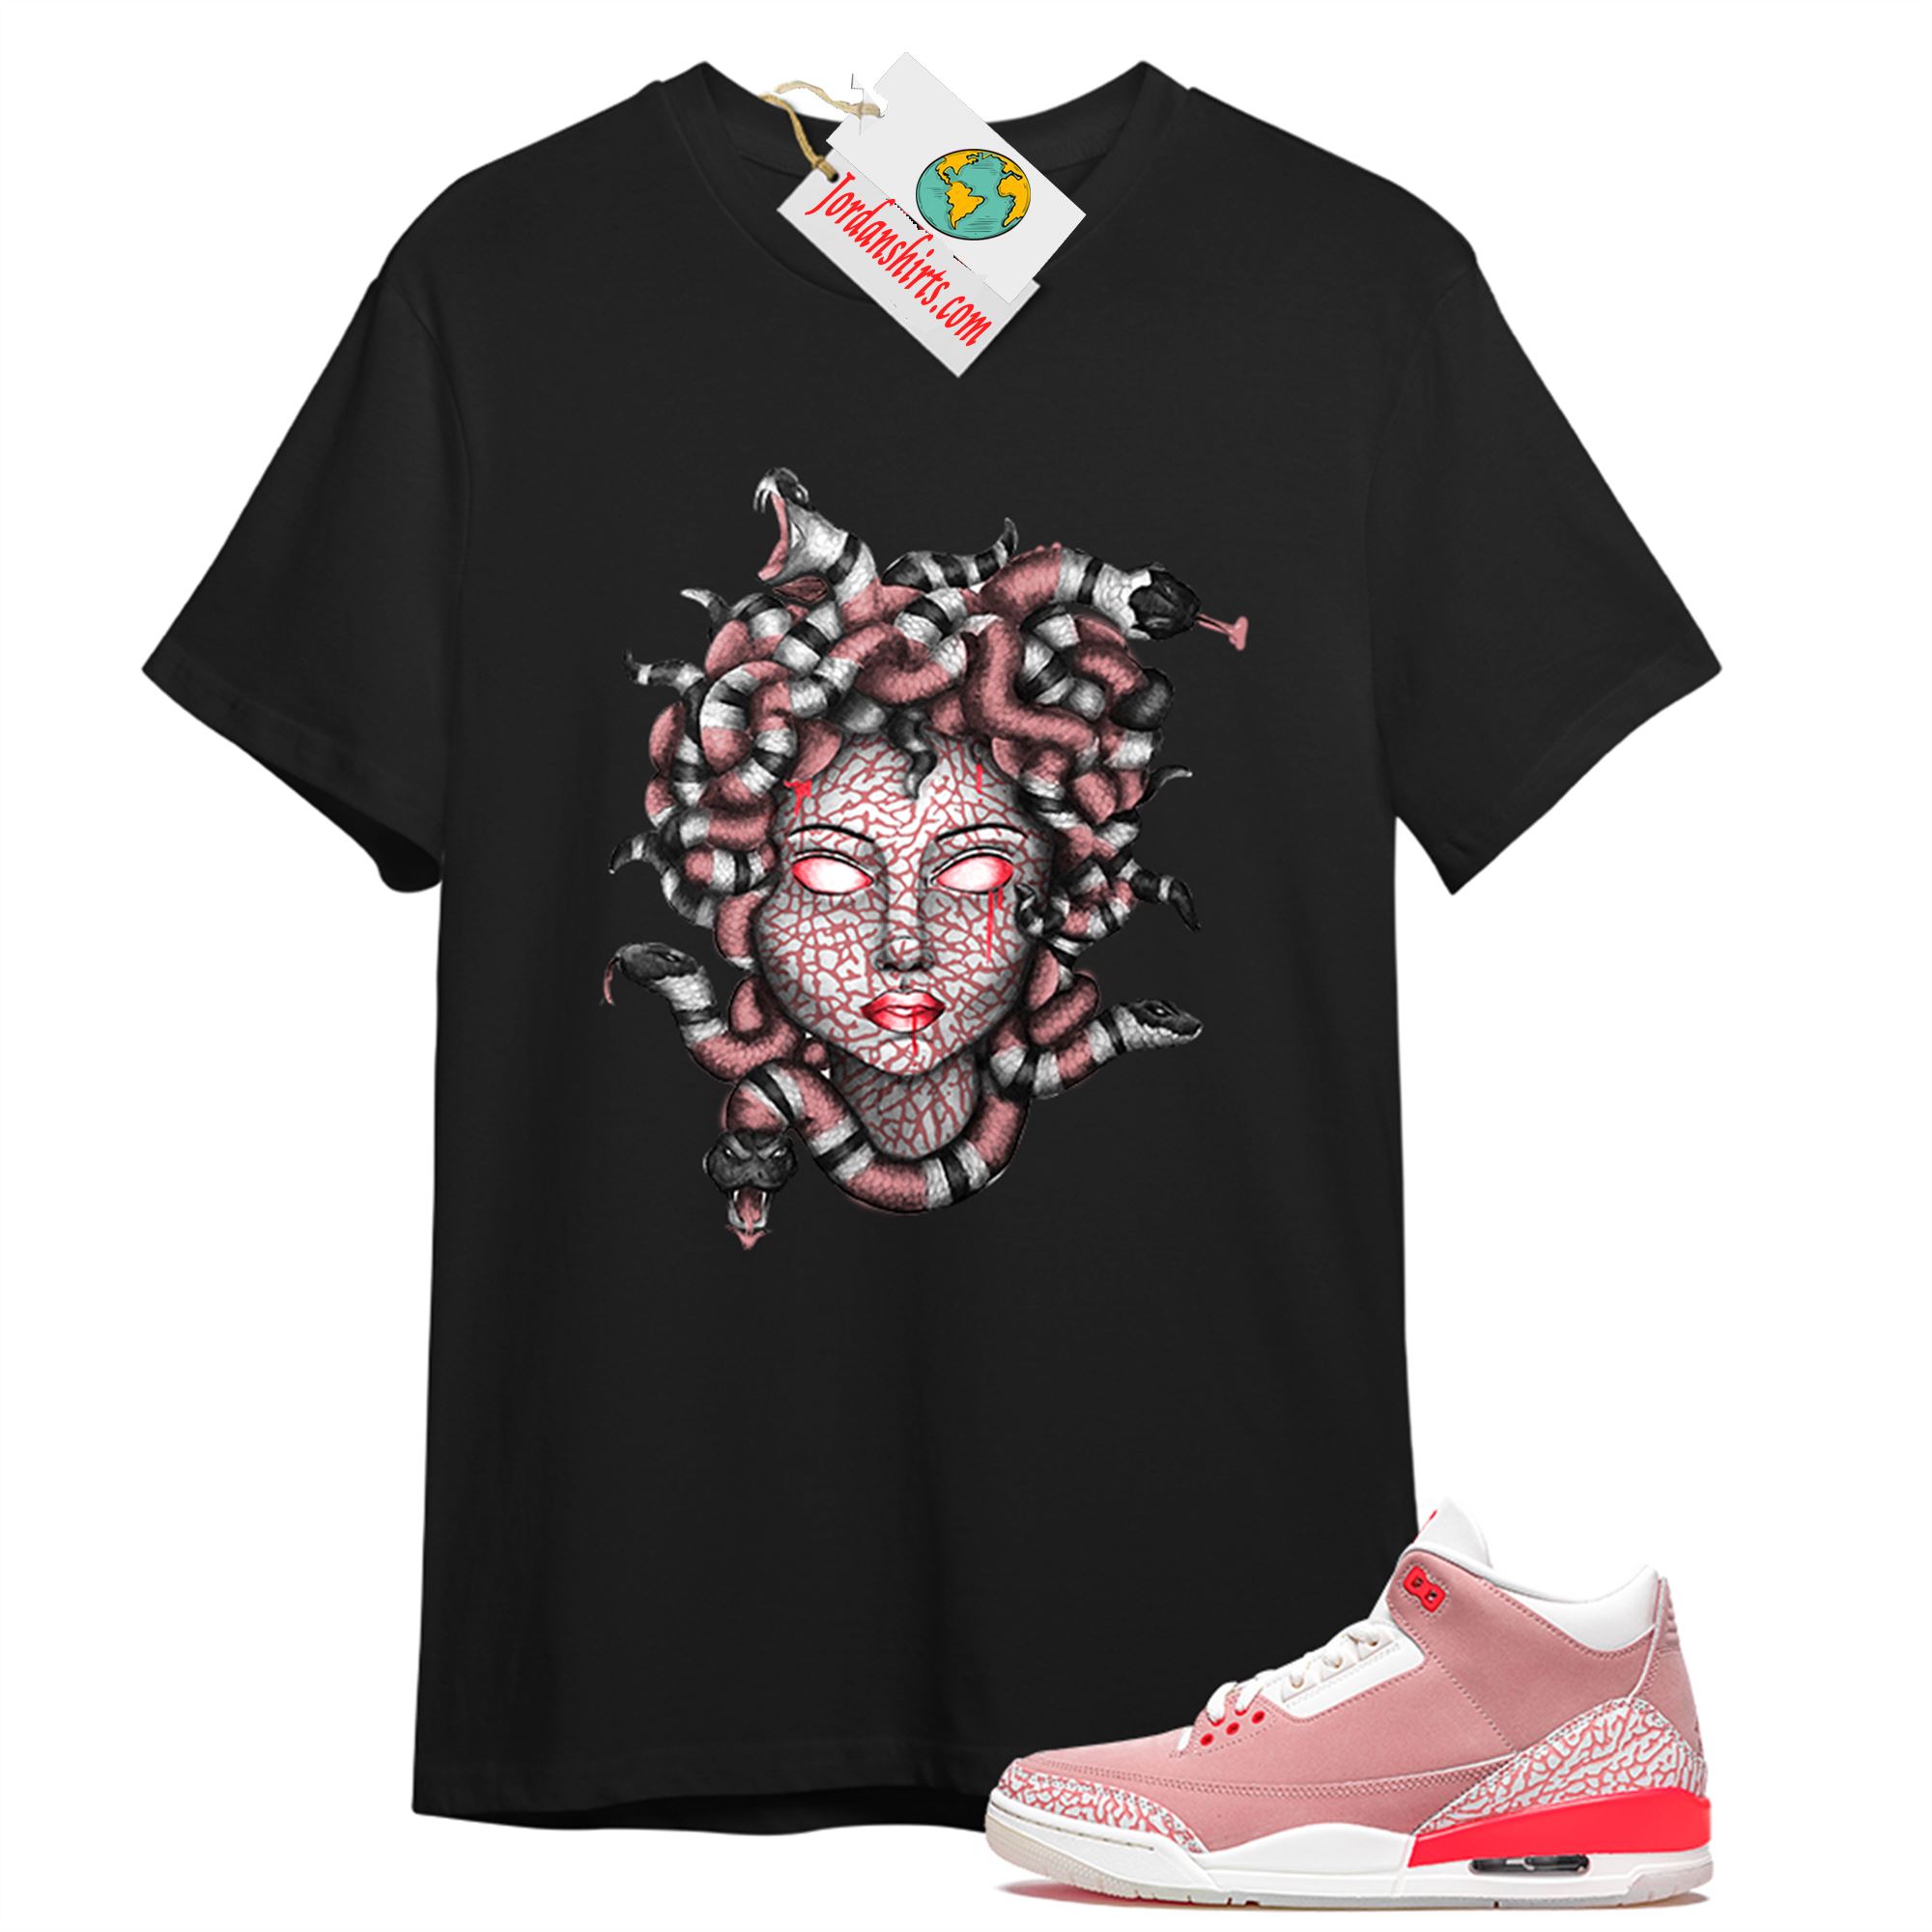 Jordan 3 Shirt, Medusa Snake Hair Black T-shirt Air Jordan 3 Rust Pink 3s Size Up To 5xl